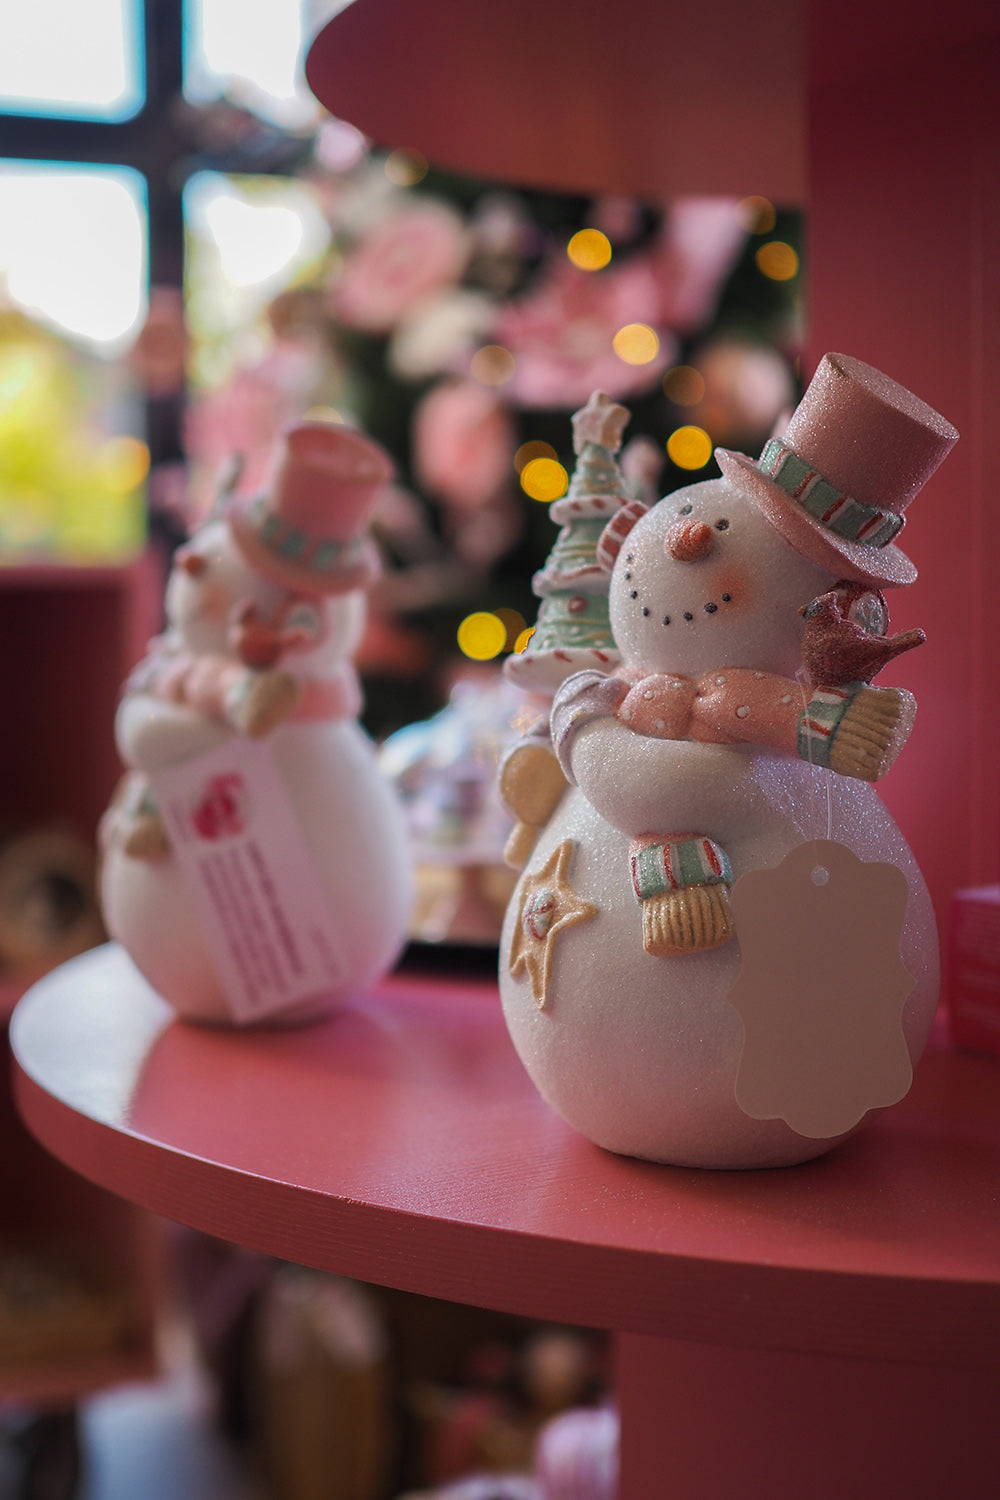 Viv! Christmas Kerstbeeld - Sneeuwpop met Kerstboom - pastel - roze wit - 21cm